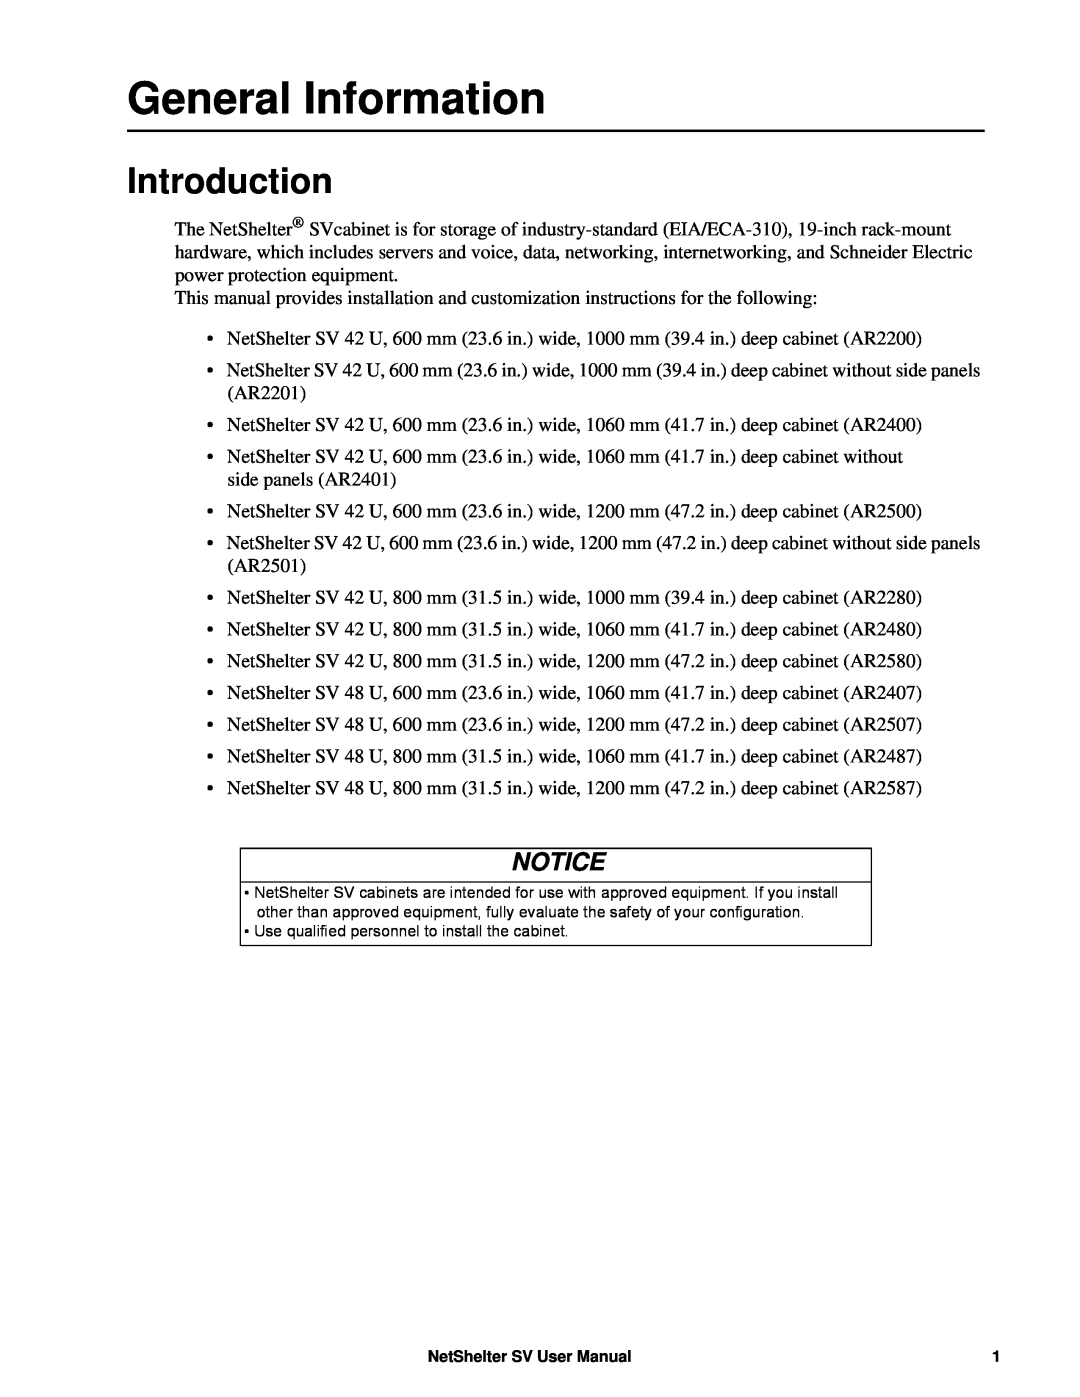 APC AR2400 user manual General Information, Introduction, Notice 